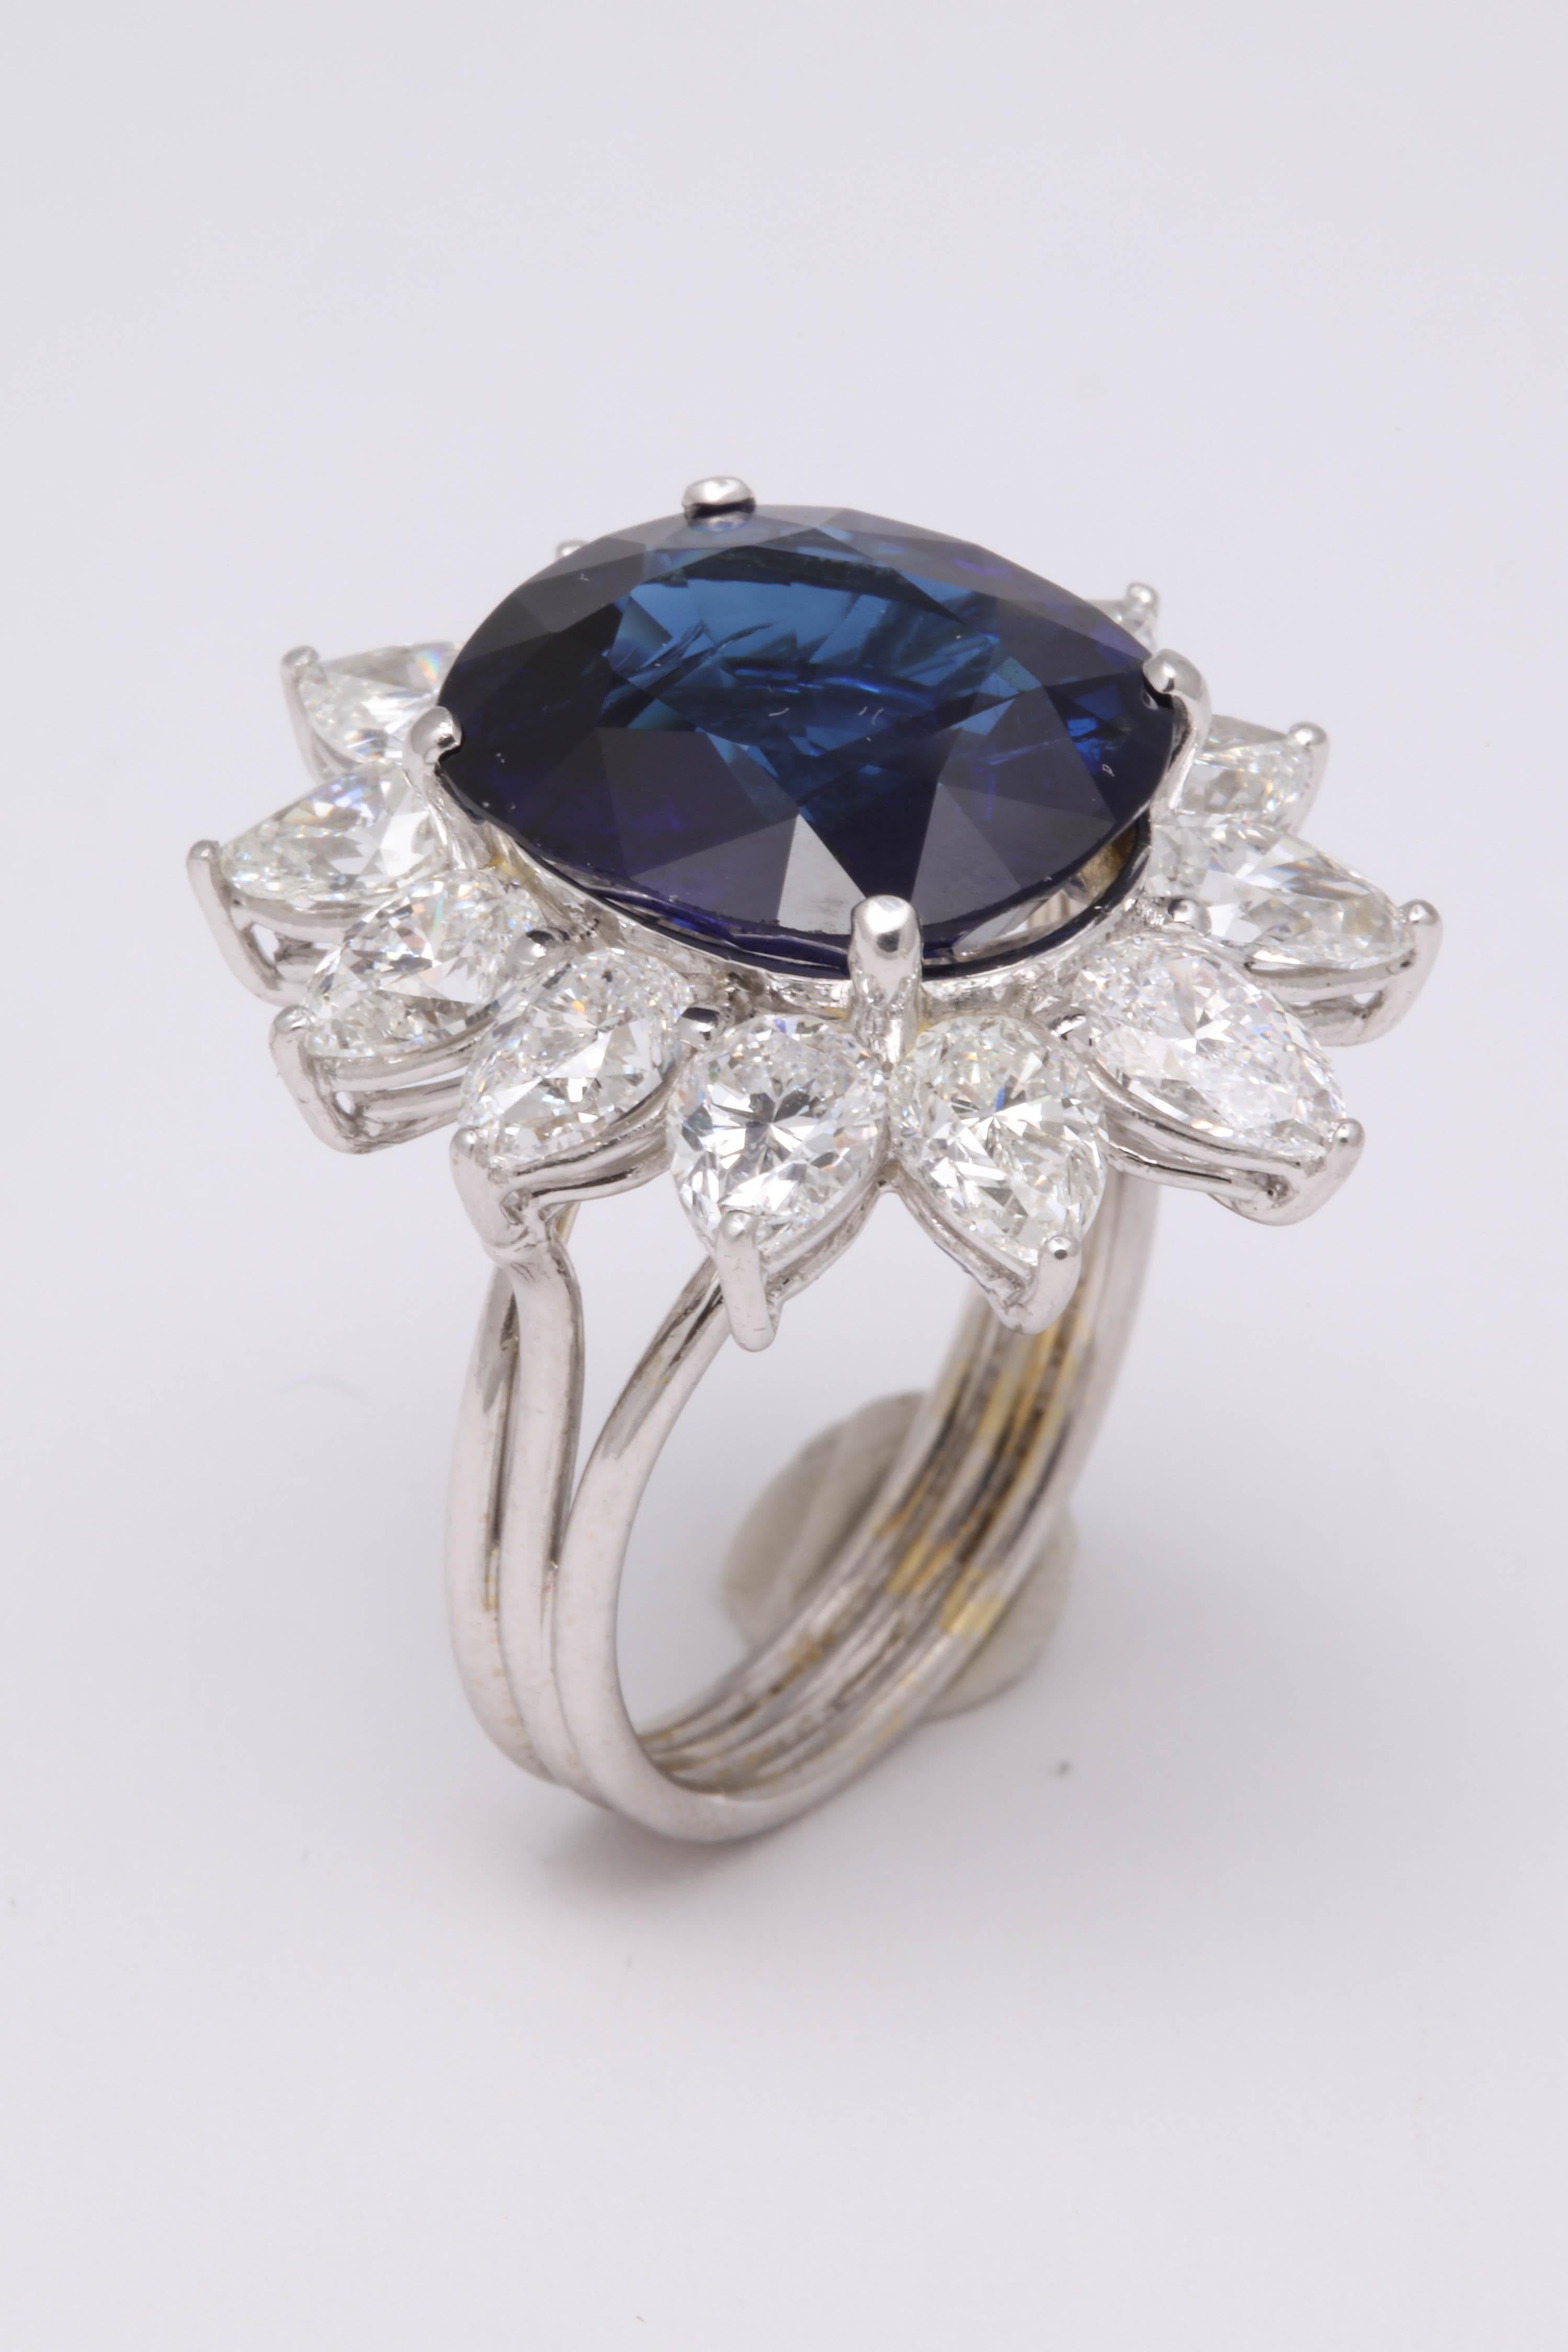 Natural Burma No Heat Blue Sapphire Ring 3